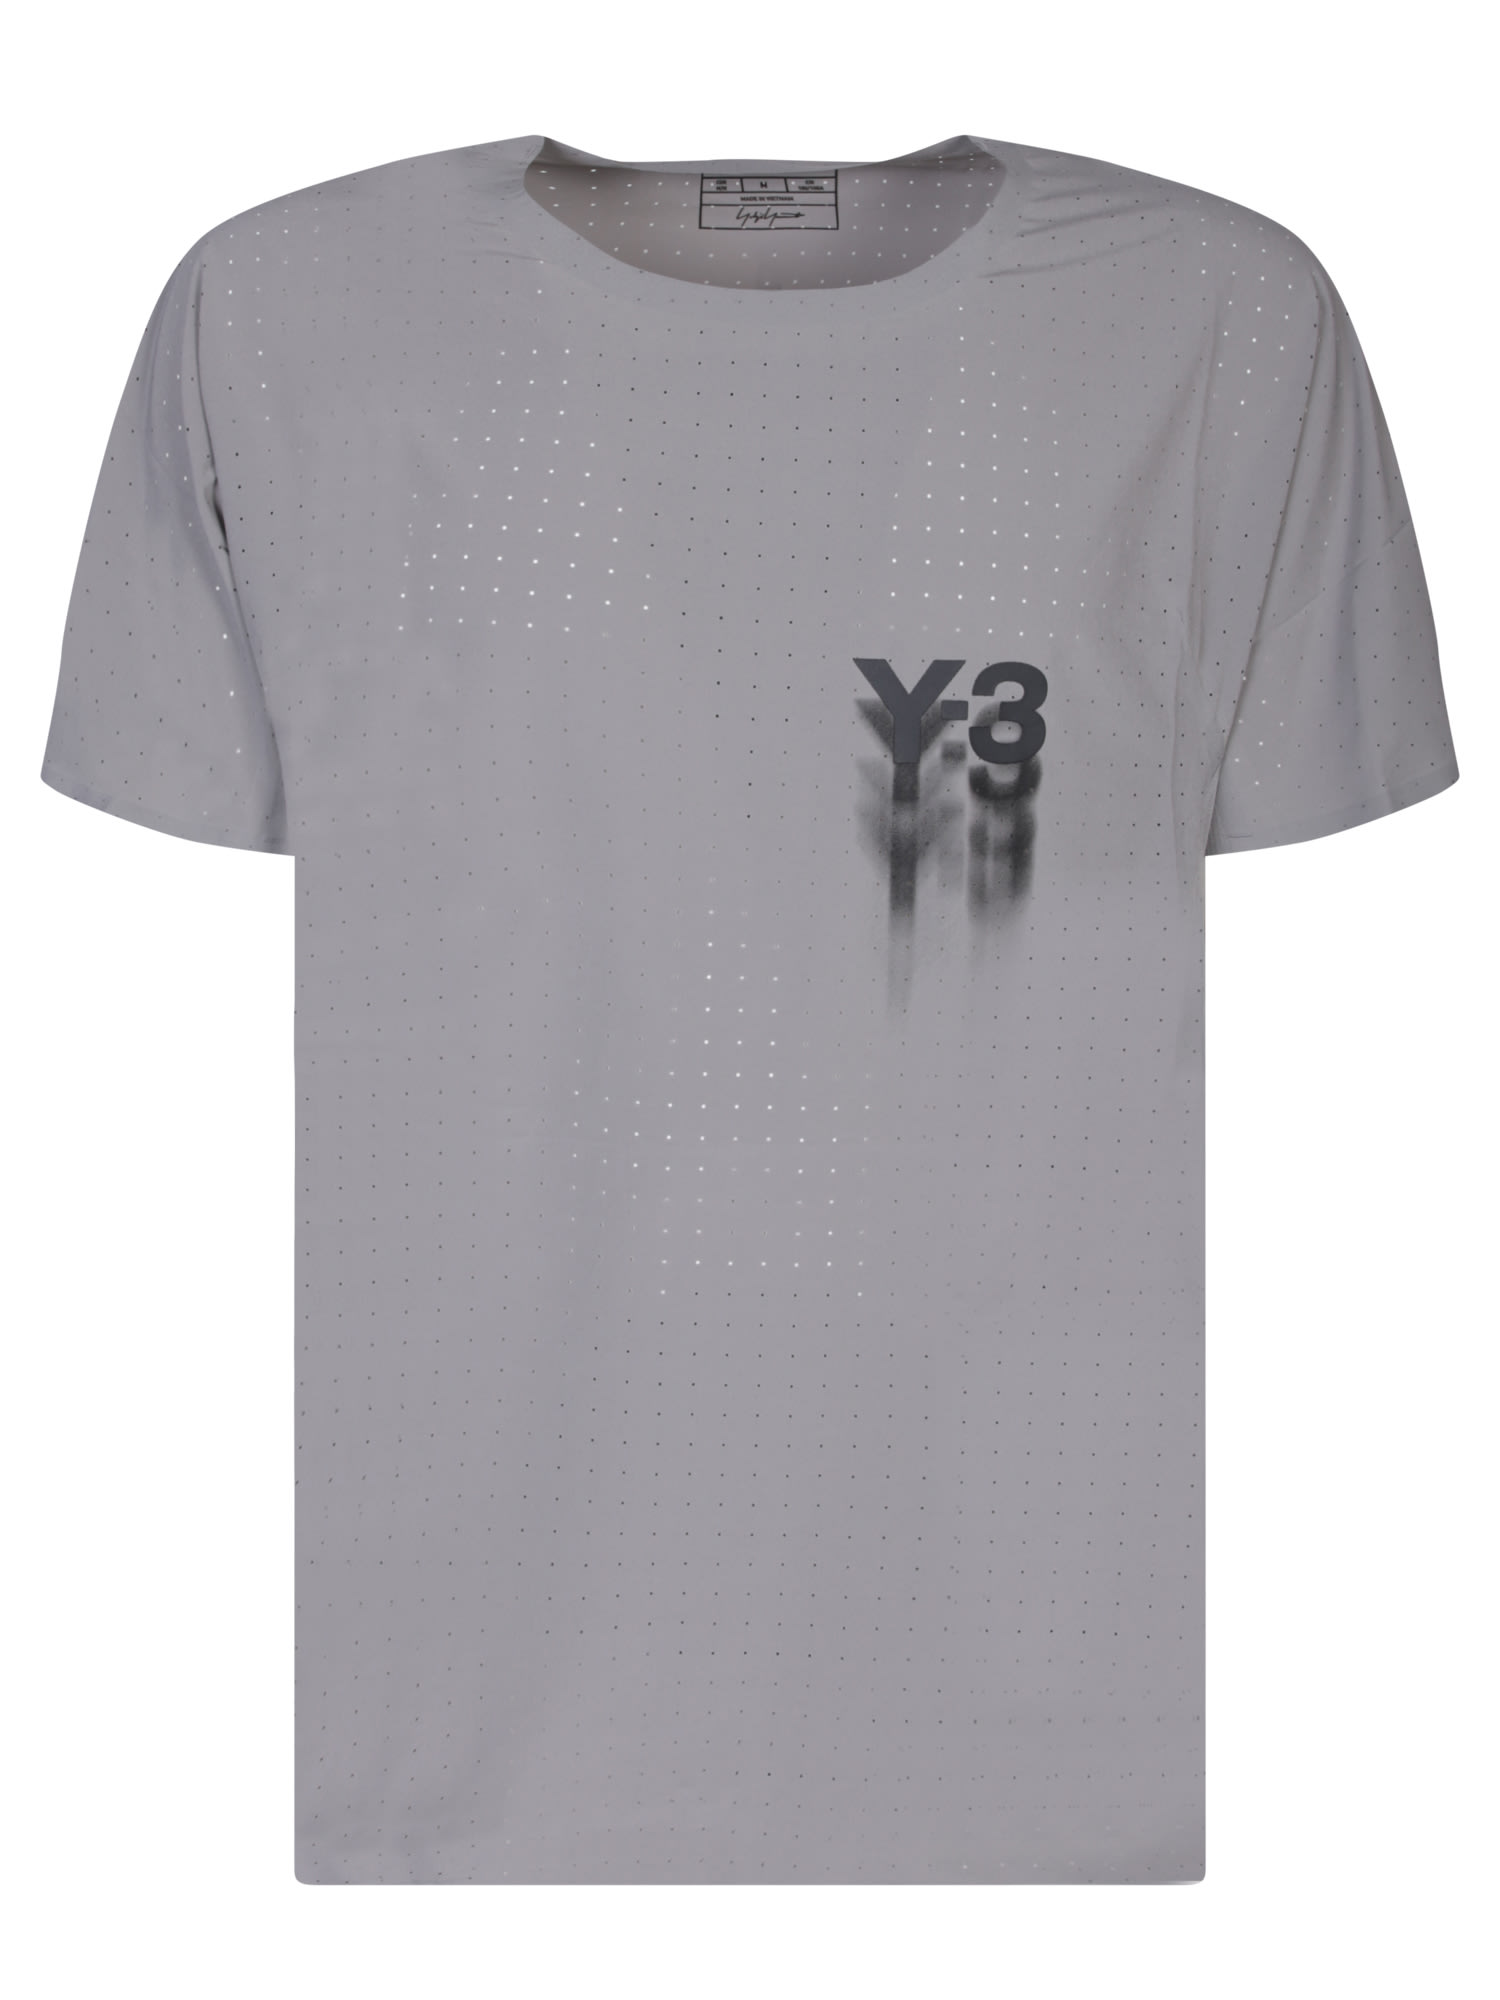 Run Ss Grey T-shirt